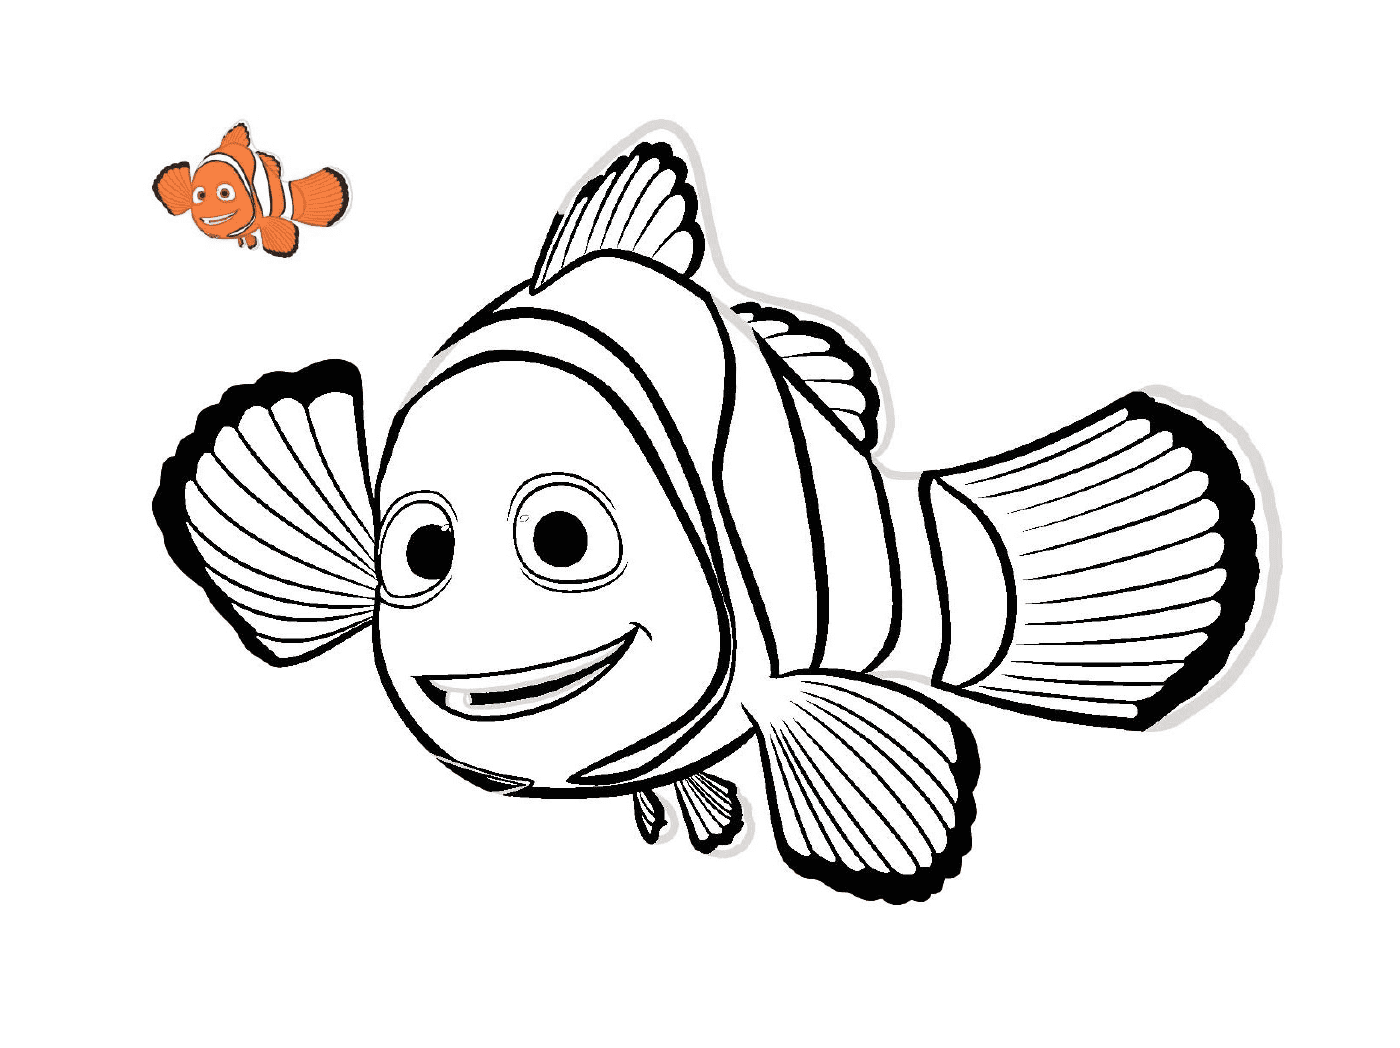  Nemo 2, uno scorfano 